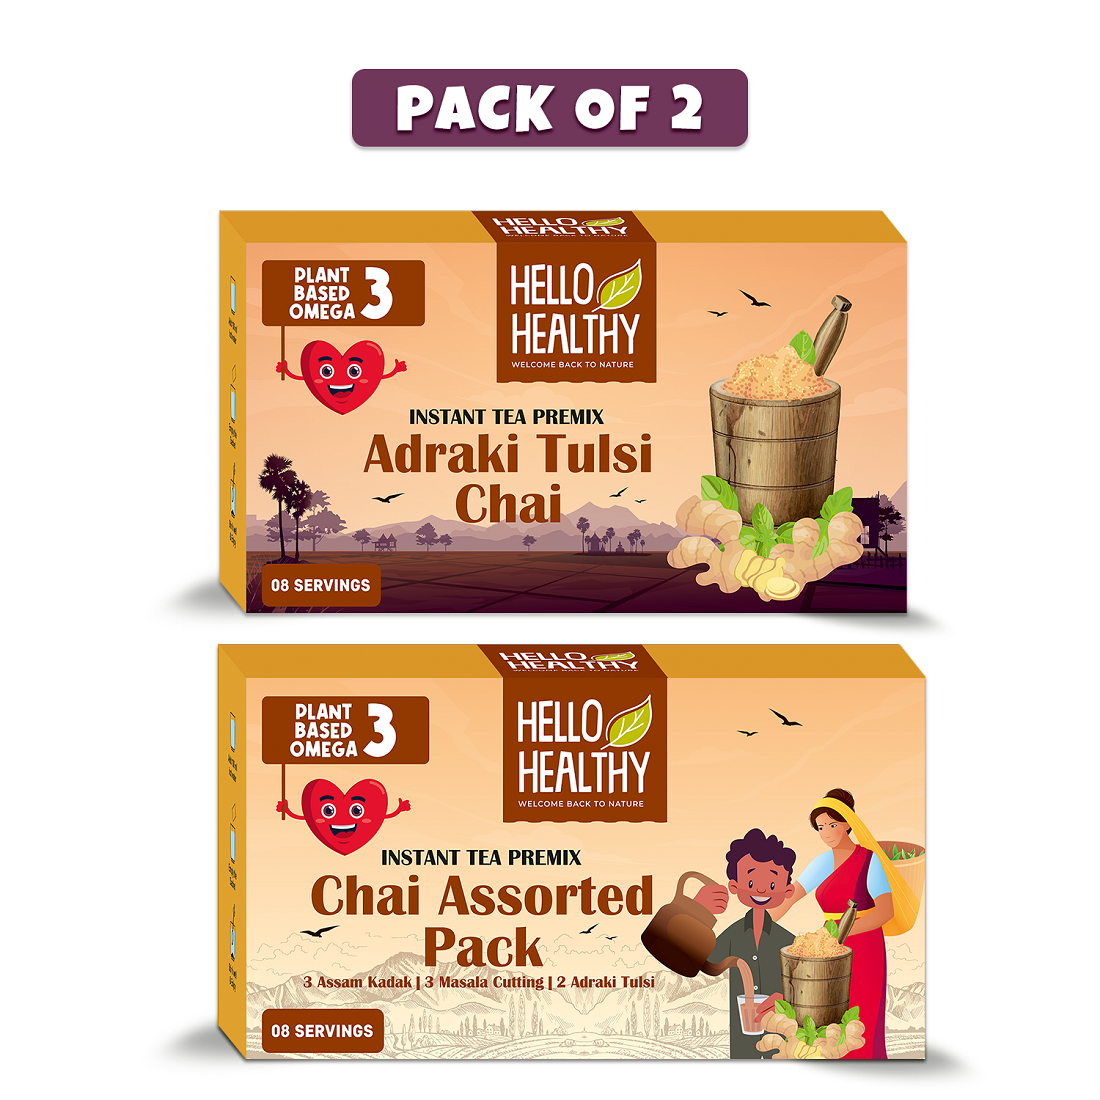 Hello Healthy Adraki Tulsi & Kadak Assam Masala Cutting Chai Assorted Pack Refreshing Flavour Tulsi, Assorted, Ginger Black Tea Bags Box  Pack of 2 Box (2 x 8 Bags)